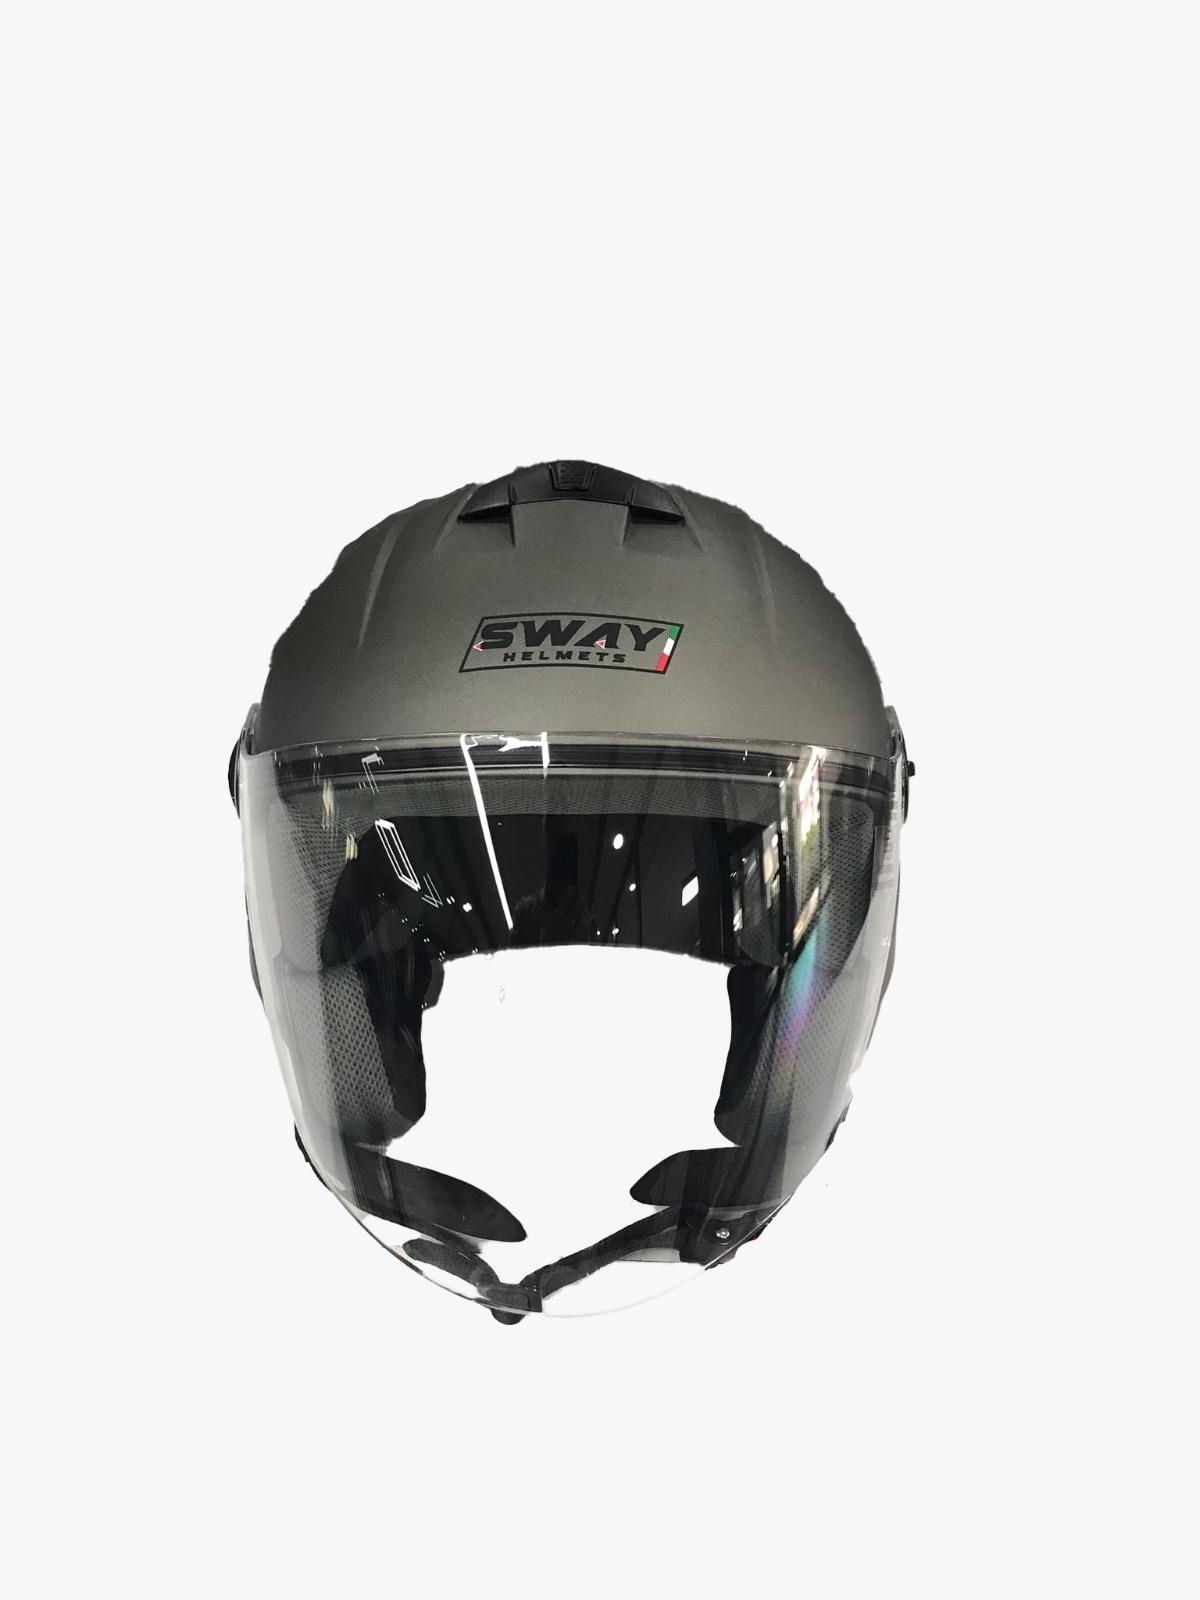 sway-715-seffaf-vizorlu-yarim-motosiklet-scooter-kaski-s-beden-metalic-gri-27032.jpg (1200×1600)